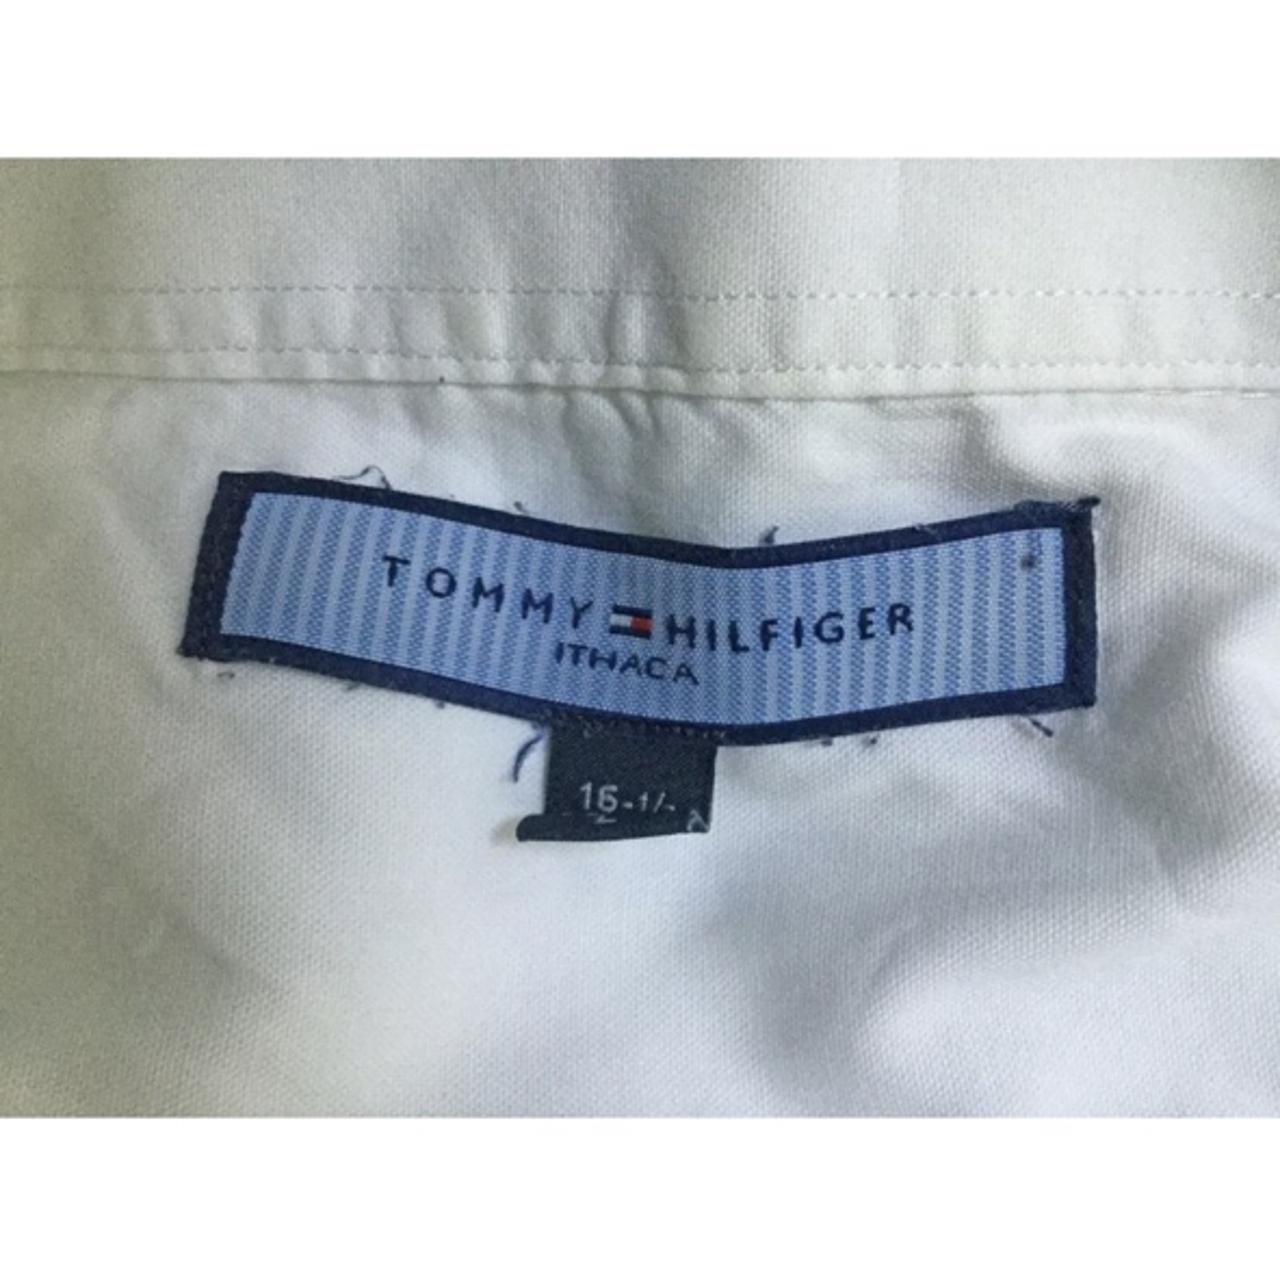 Tommy Hilfiger RN 36543 white cotton shirt size 16.5... - Depop